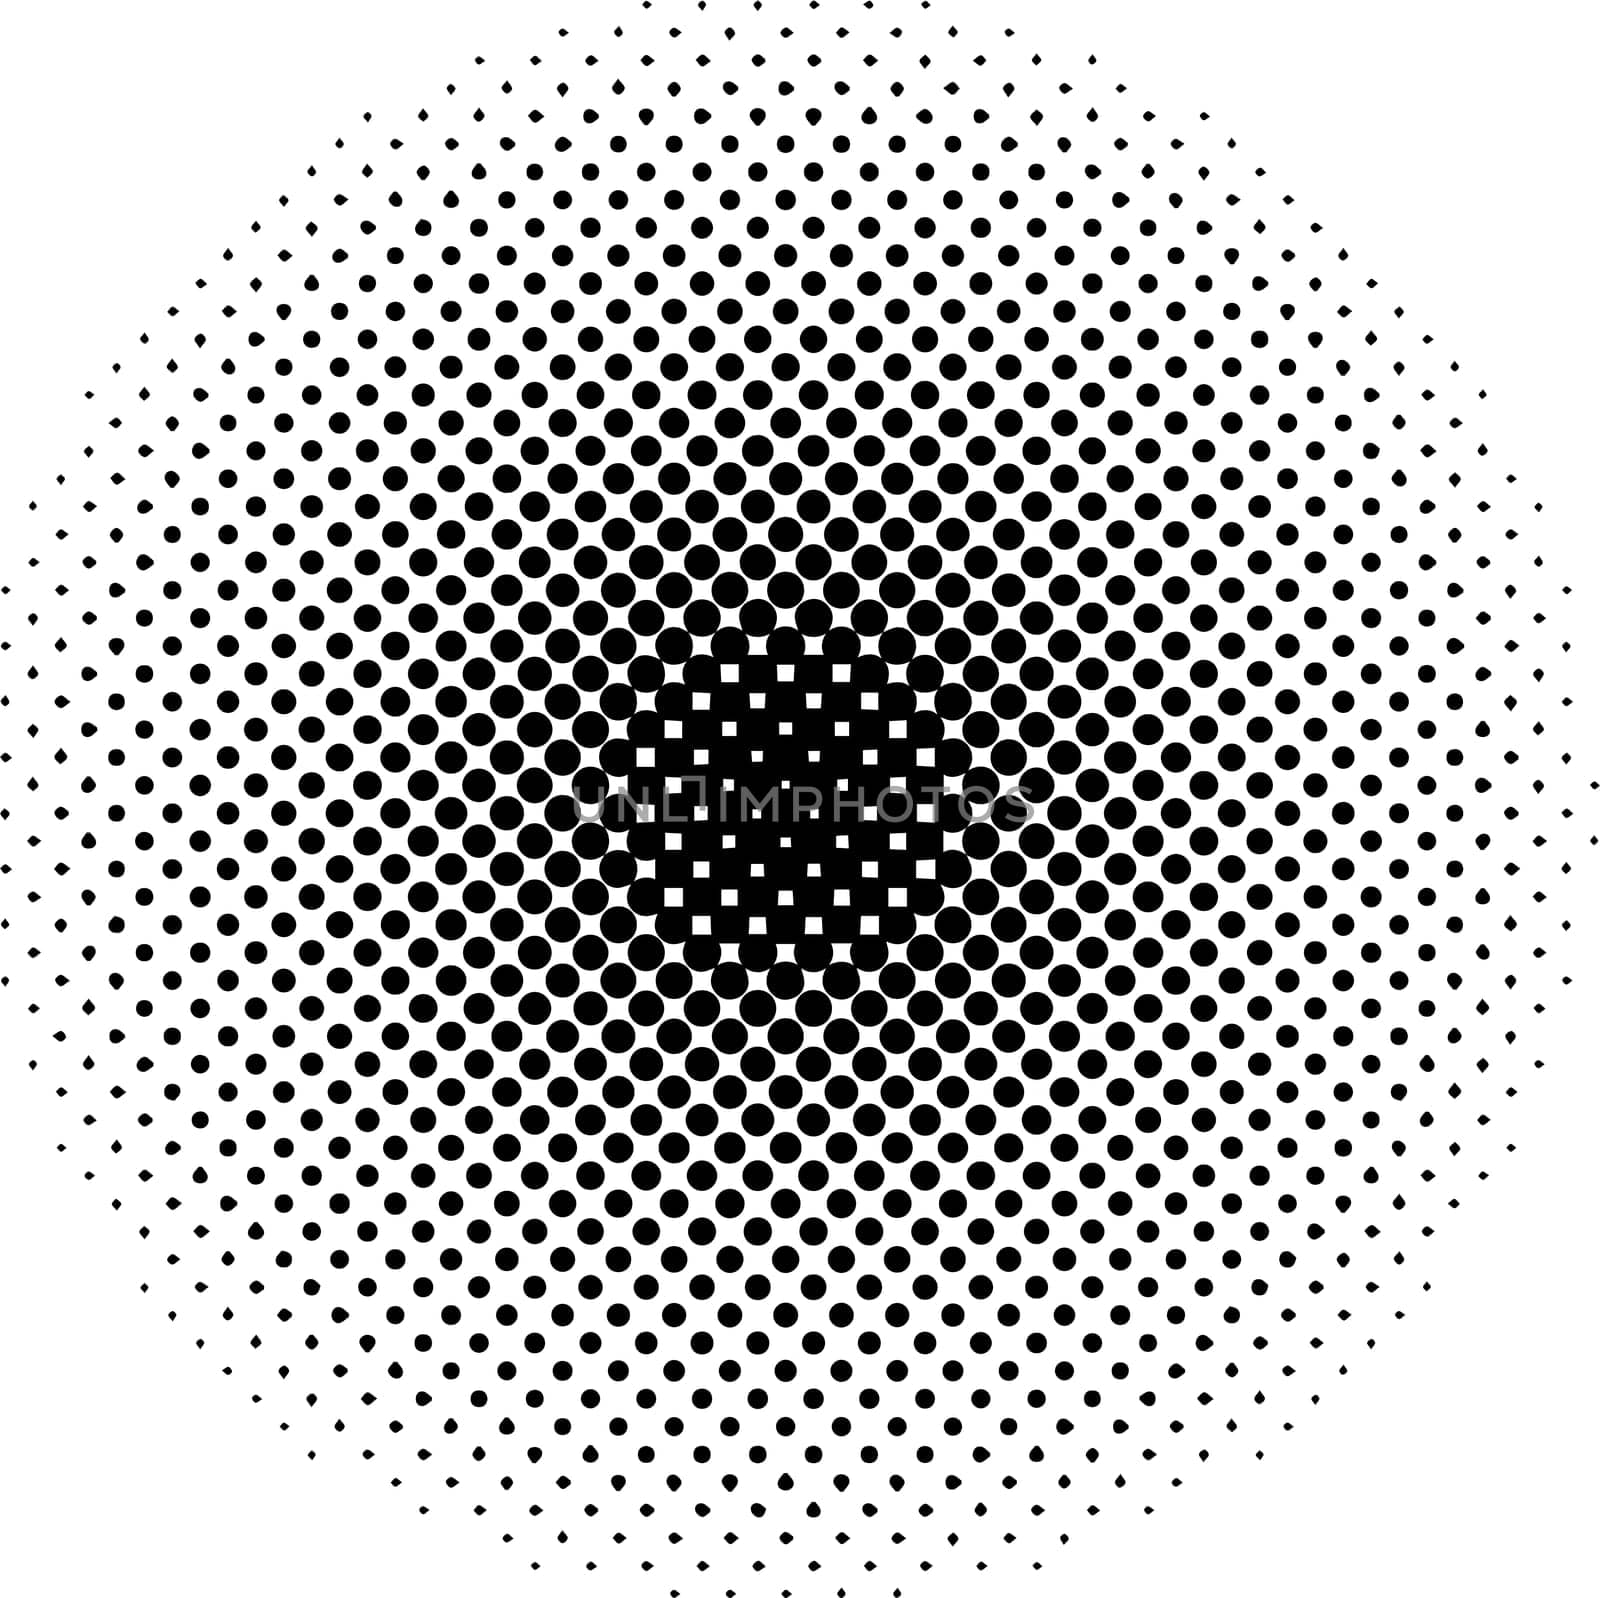 Halftone, circles size circles gradations dot pop art pattern by koksikoks